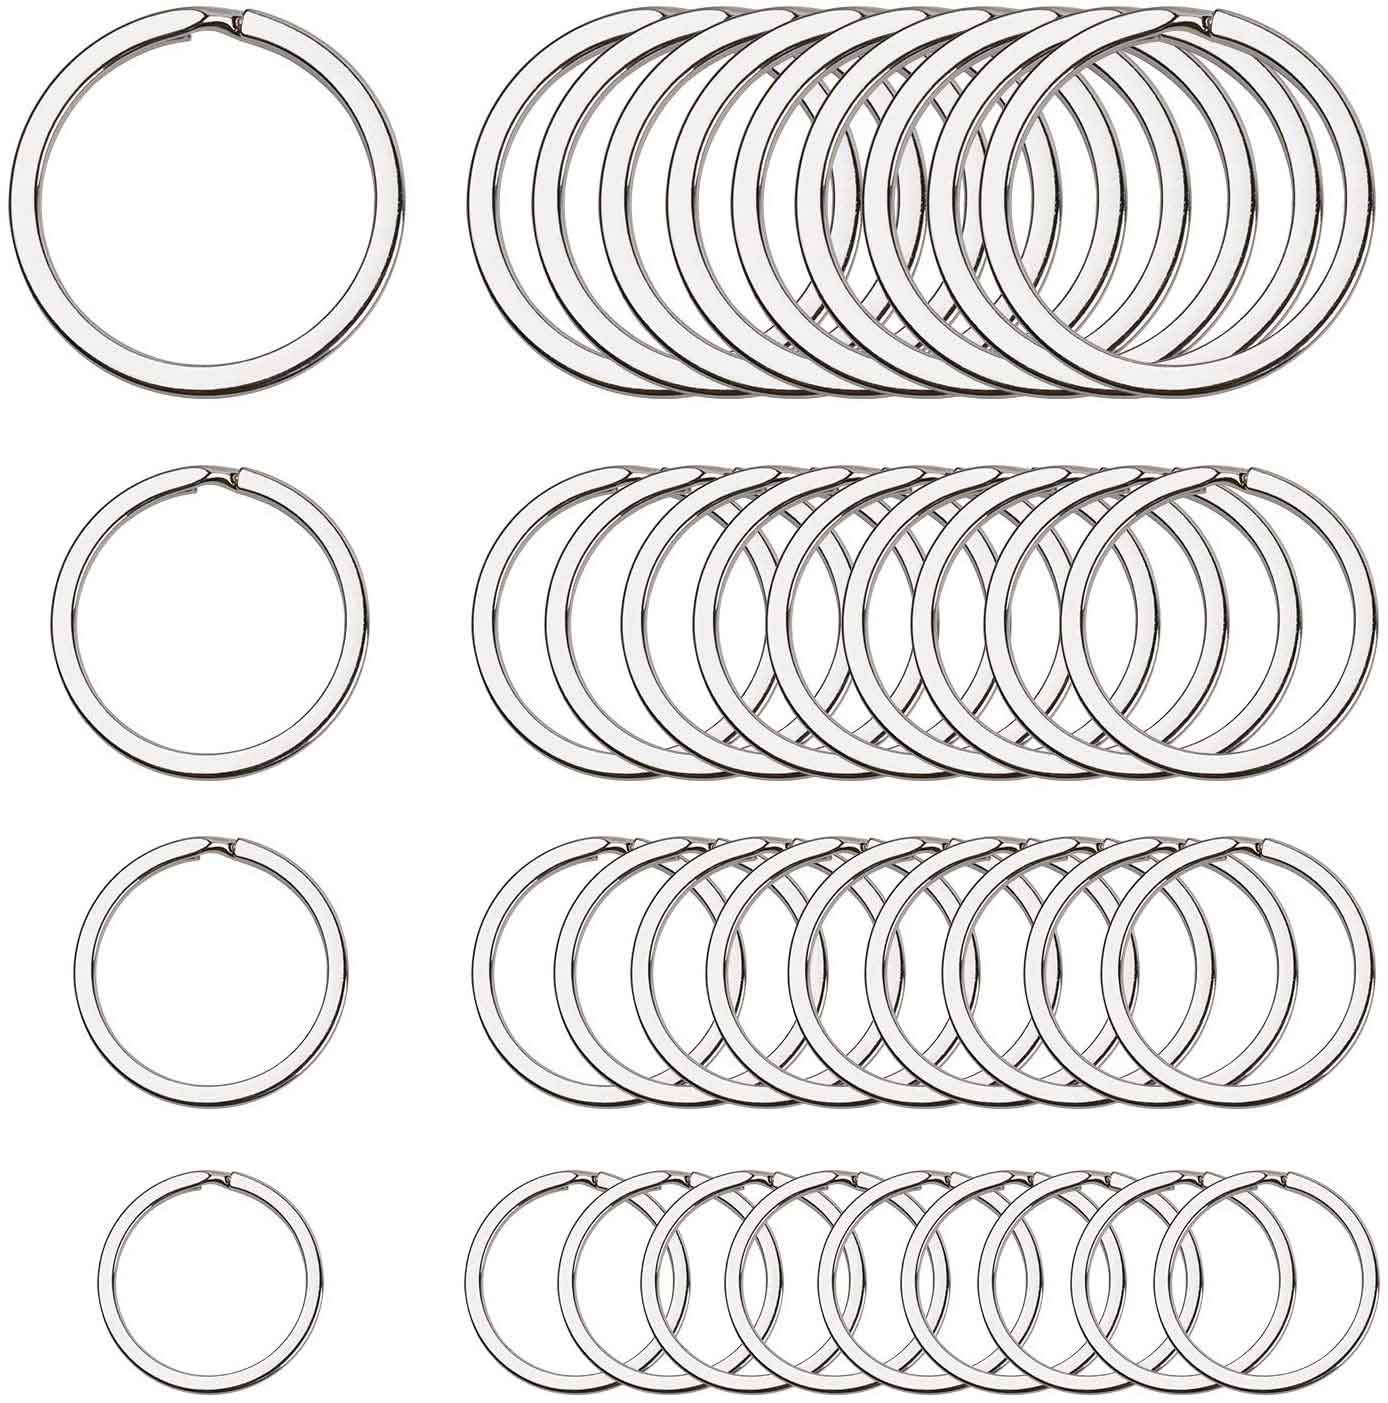 Flat Key Rings Key Chain Metal Split Ring 40pcs (Round 1.25 Inch Diameter),  for Home Car Keys Organization, Arts & Crafts, Lanyards, Colored (Black